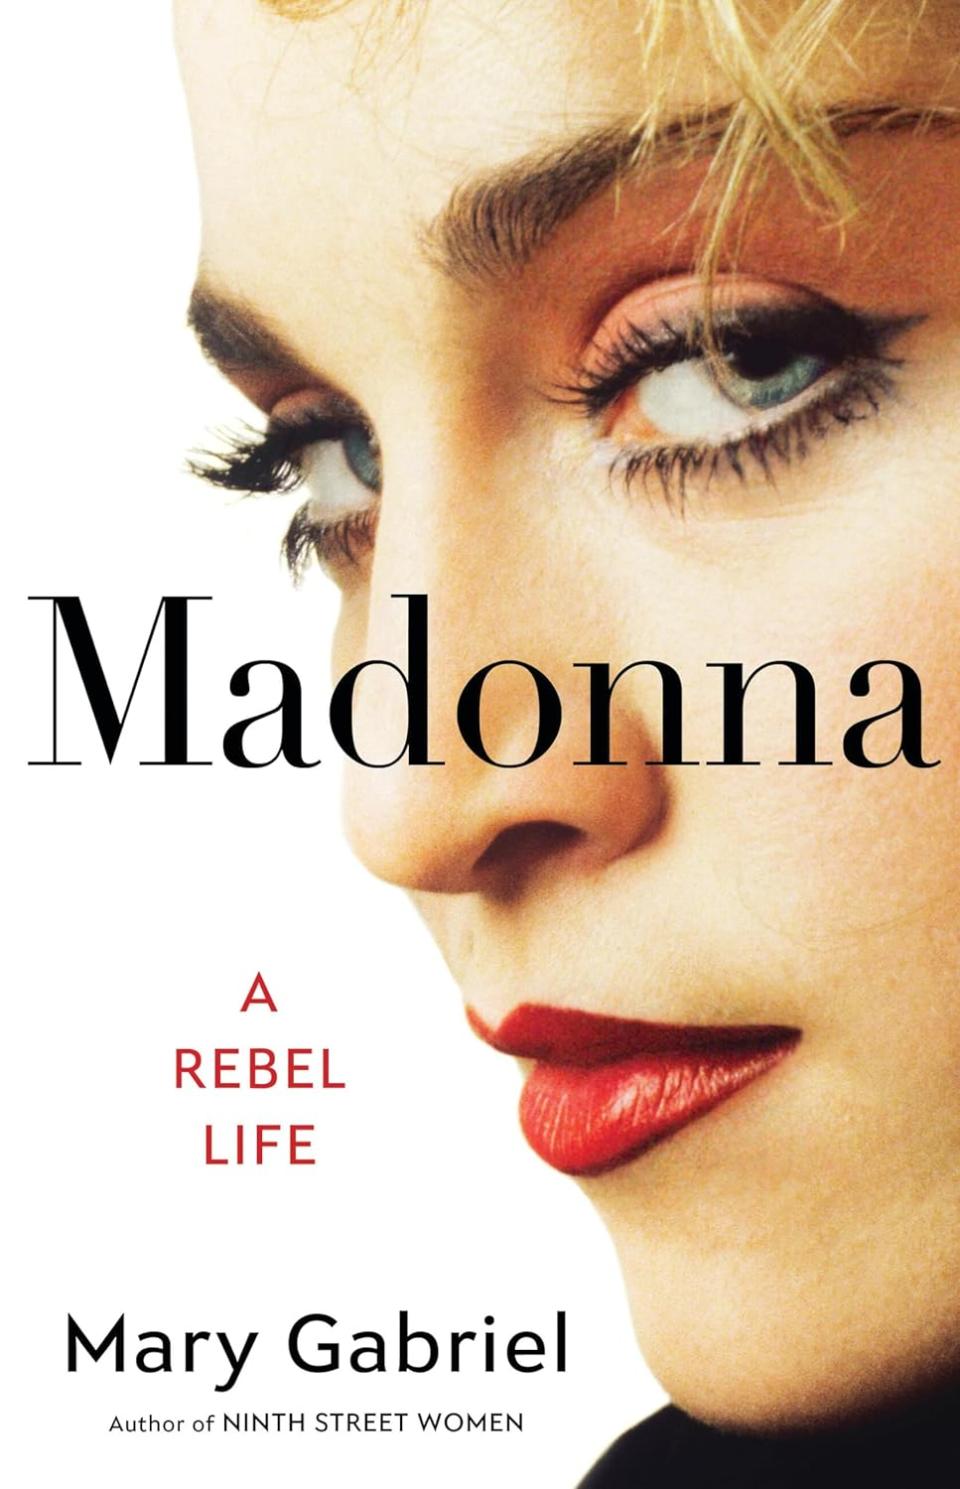 "Madonna: A Rebel Life"